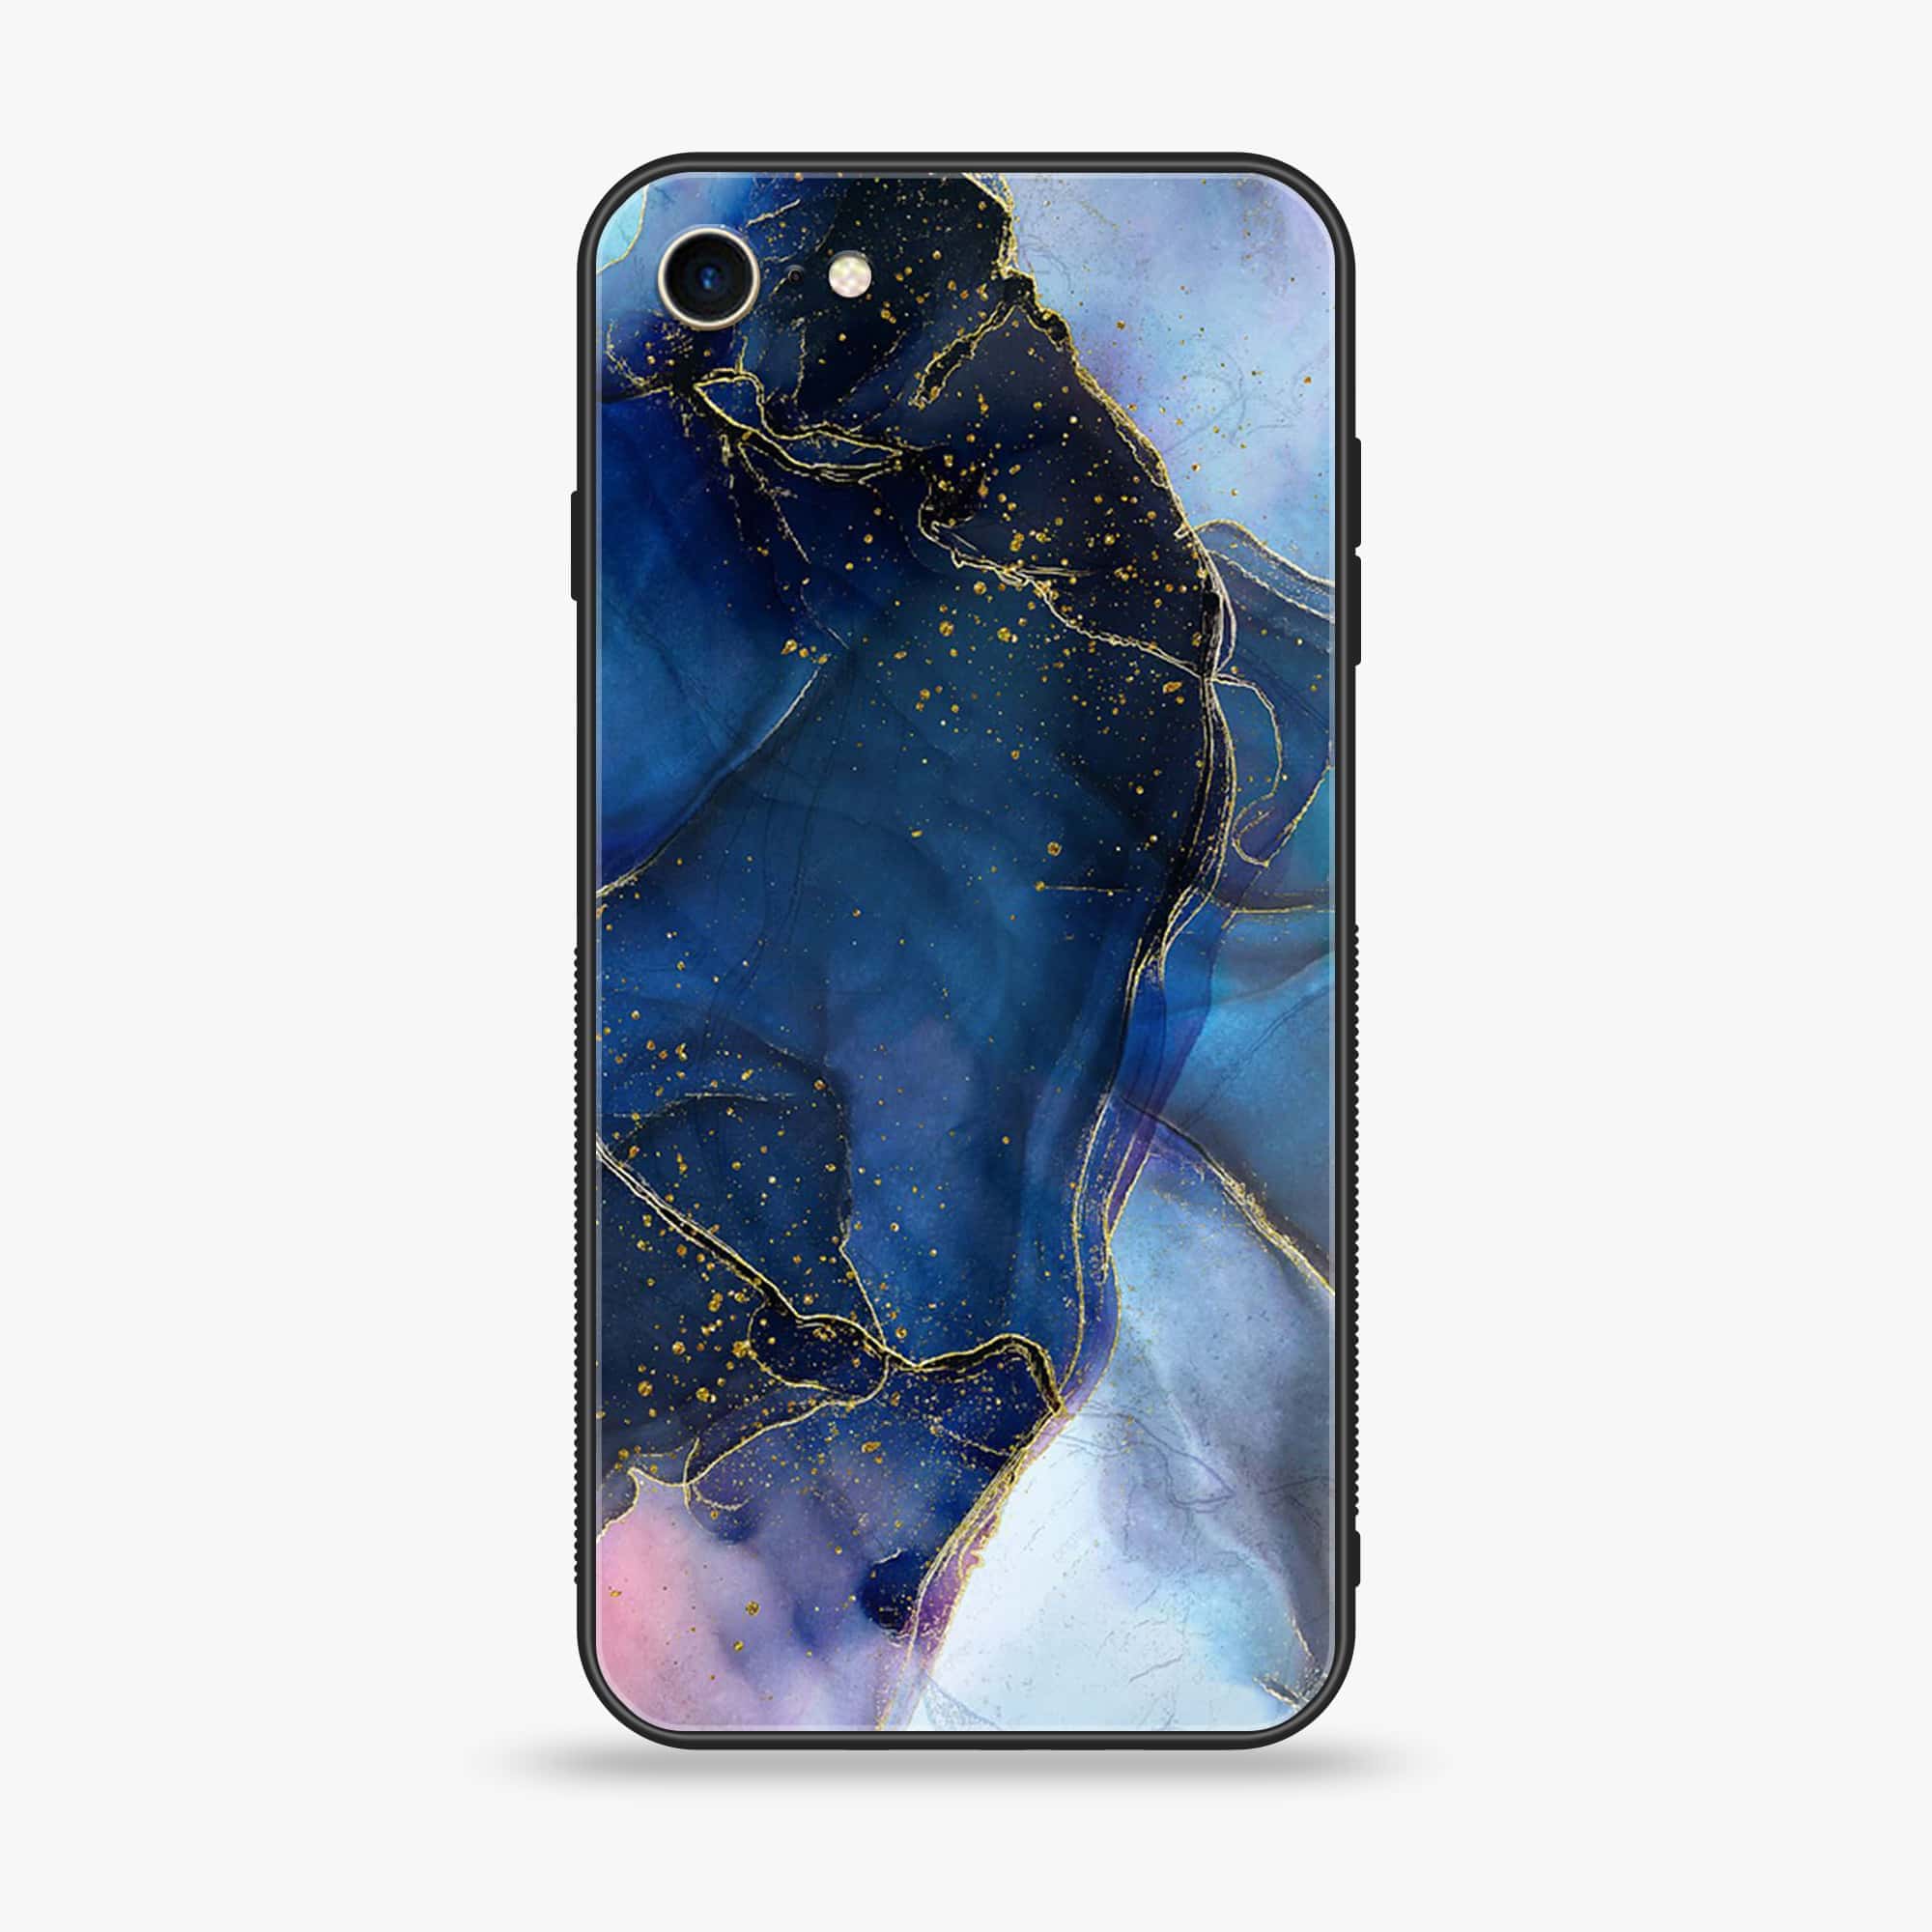 iPhone SE 2020 - Blue Marble Series - Premium Printed Glass soft Bumper shock Proof Case